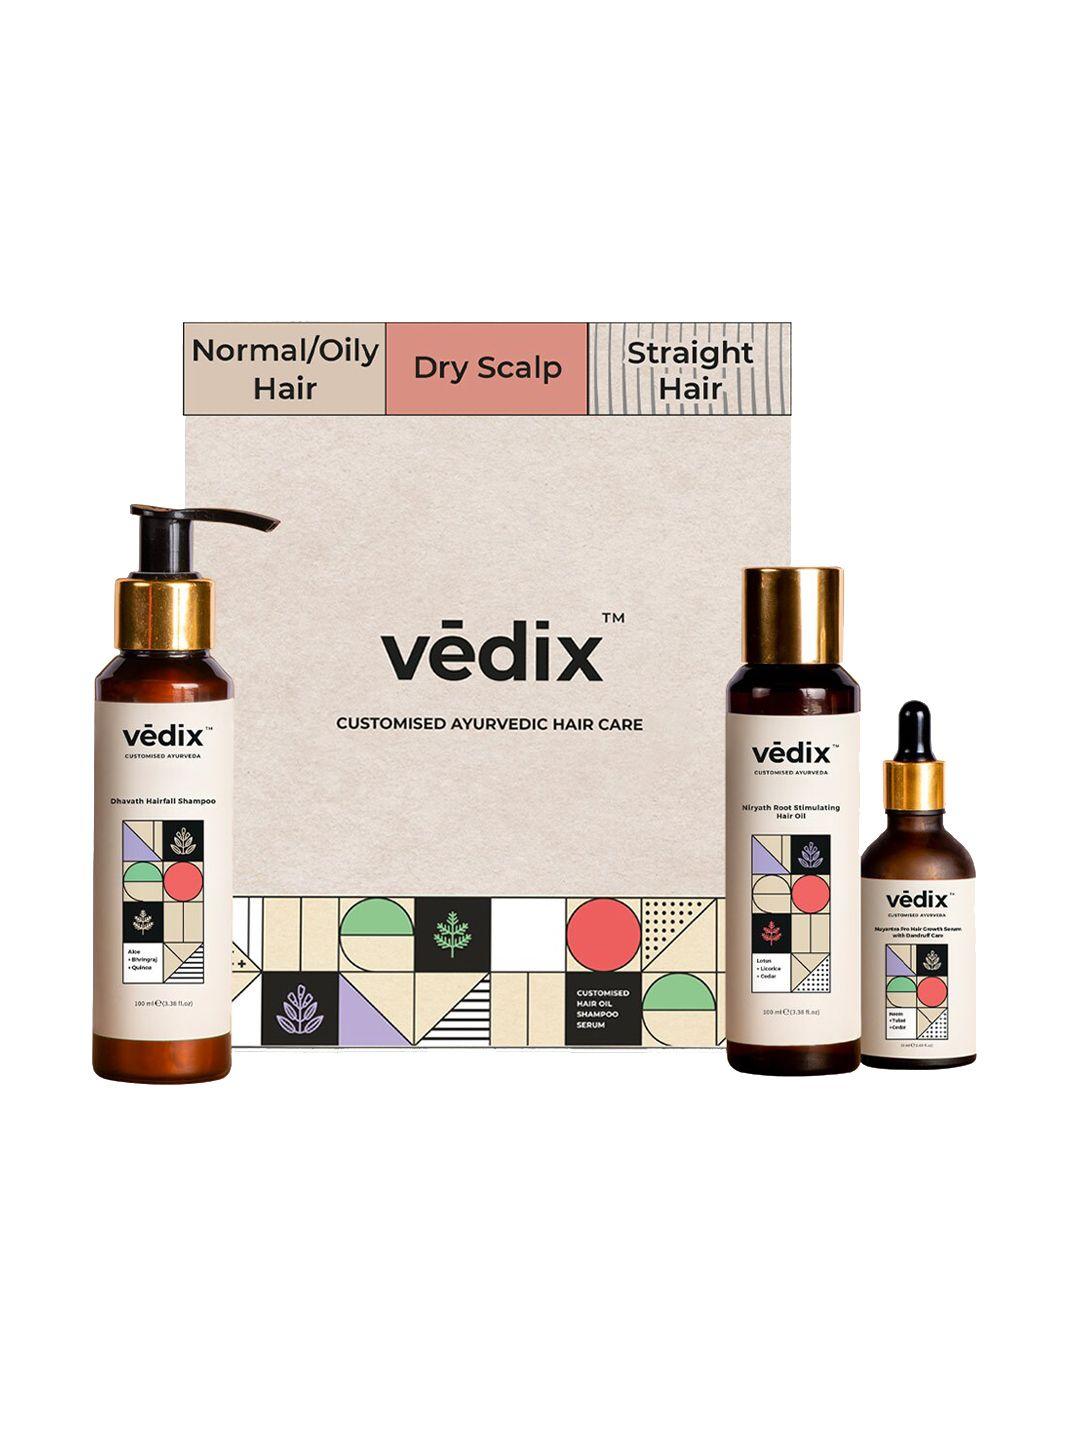 vedix customized hair fall control & dandruff care regimen - dry scalp & straight hair